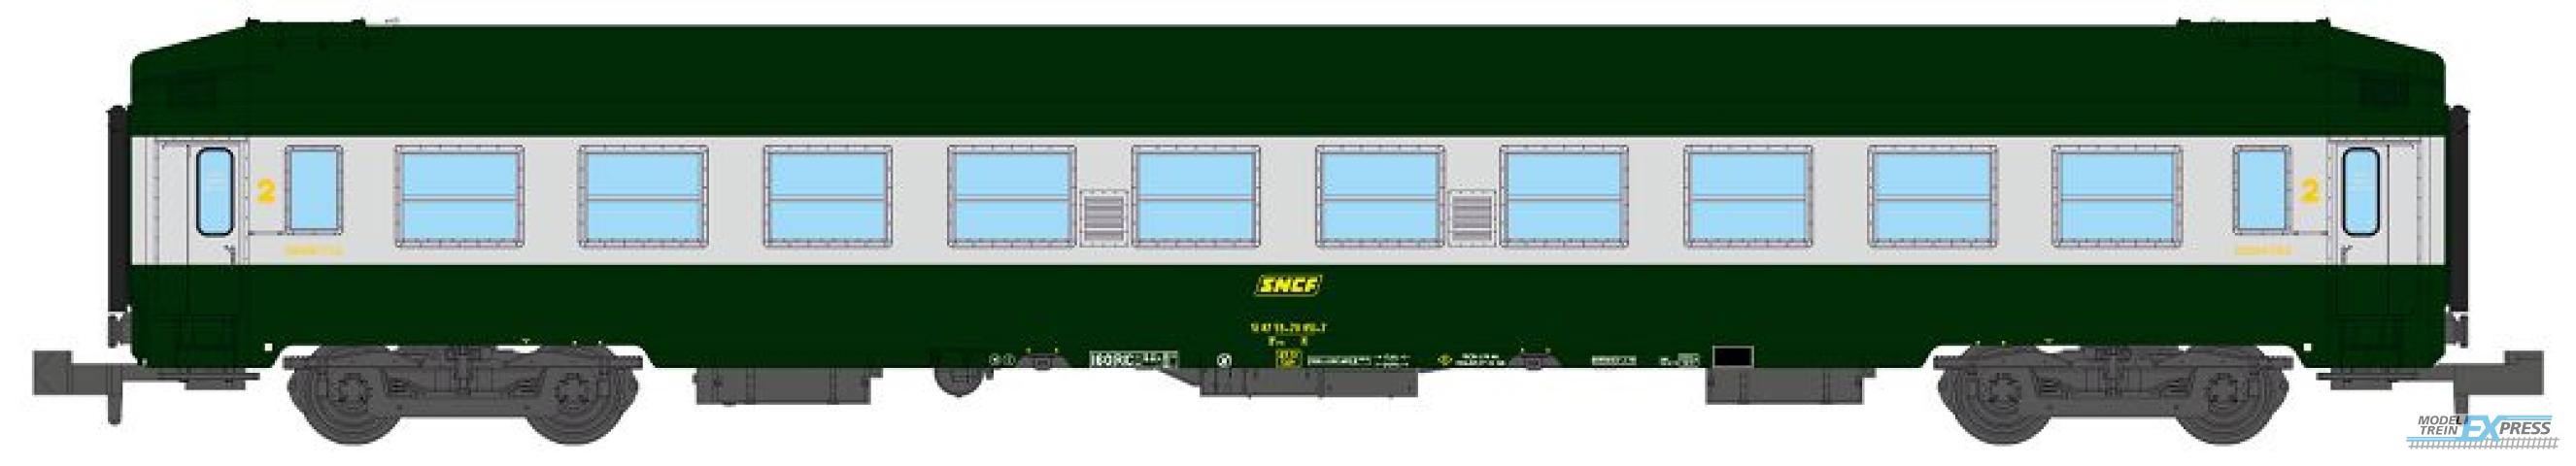 REE models NW-219 UIC SLEEPING CAR, High roof, Green-Alu 160 color Era IV